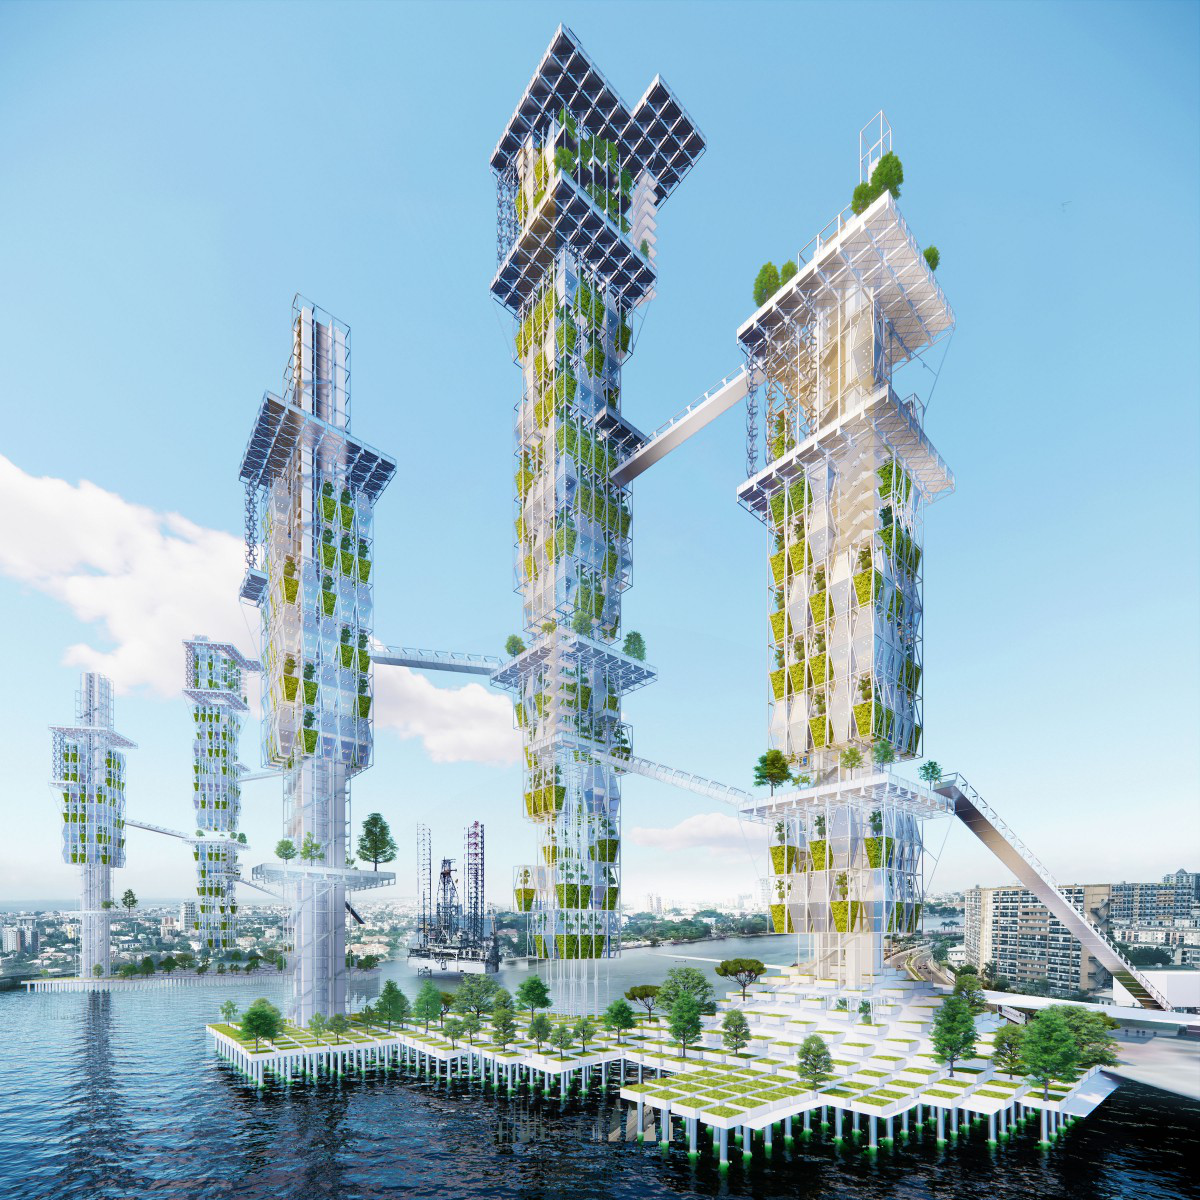 Skyrig: Transforming Oil Rigs into Sustainable Garden Buildings